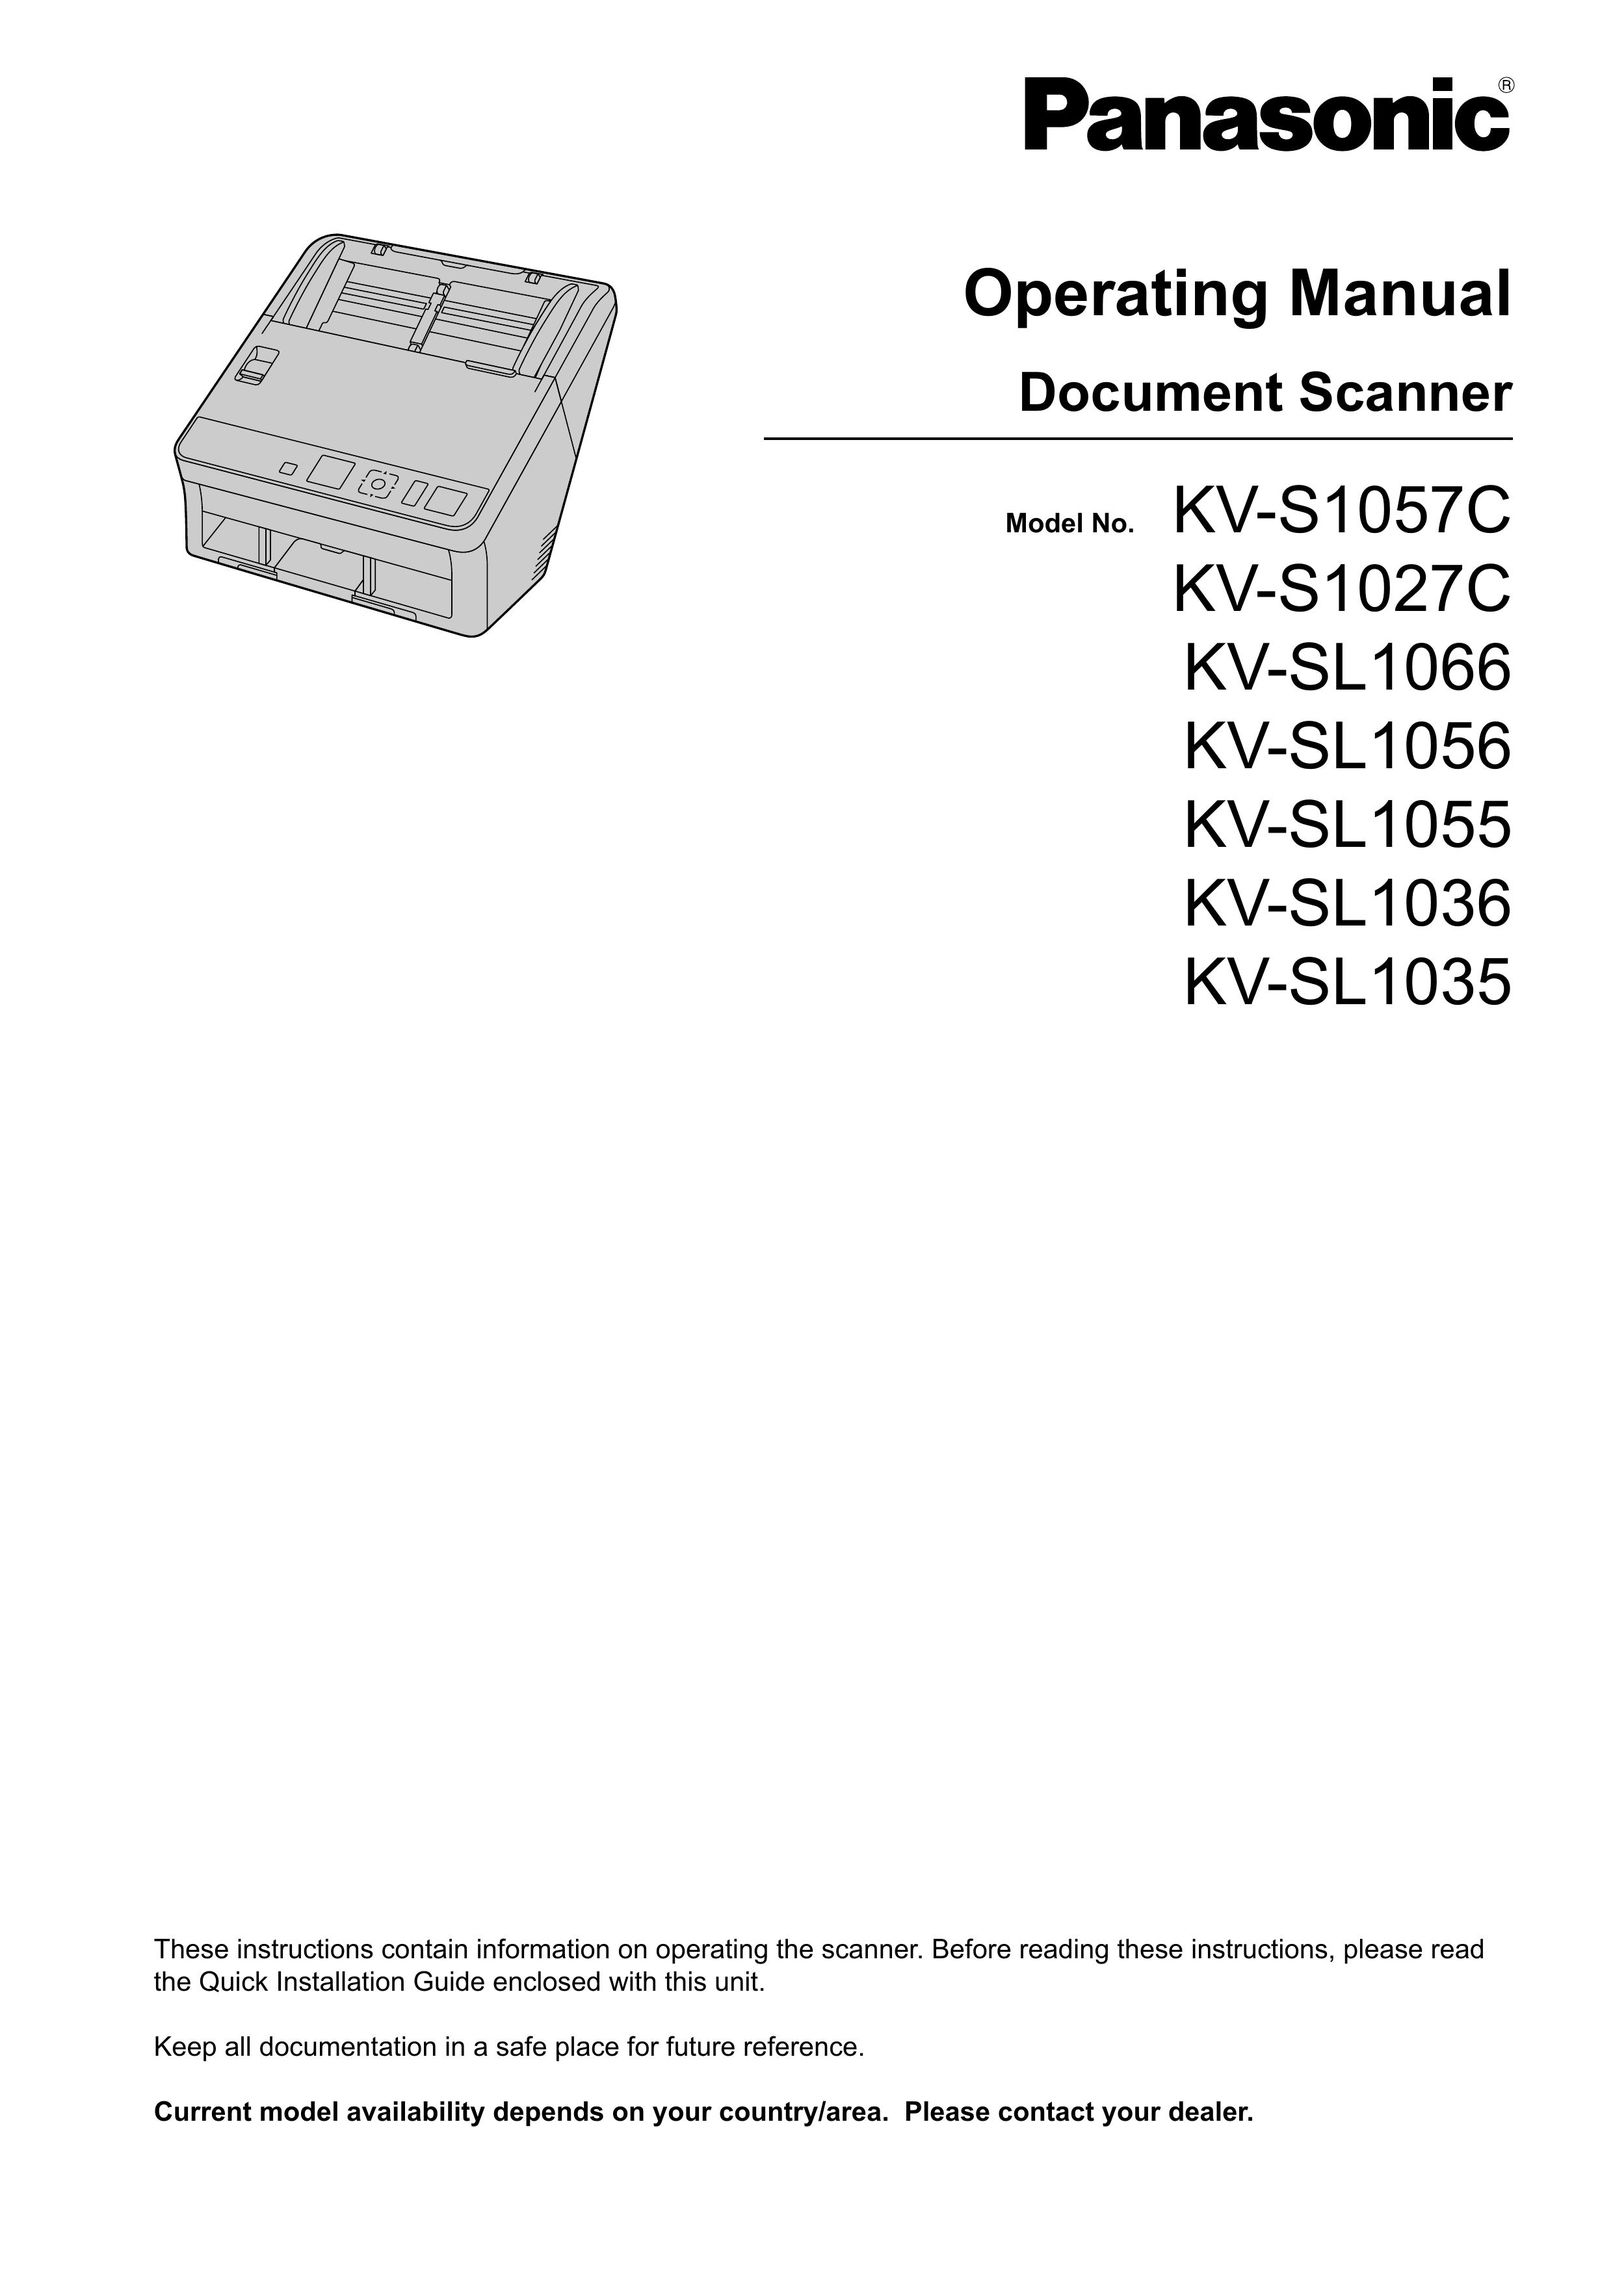 Panasonic KV-SL1055 Scanner User Manual